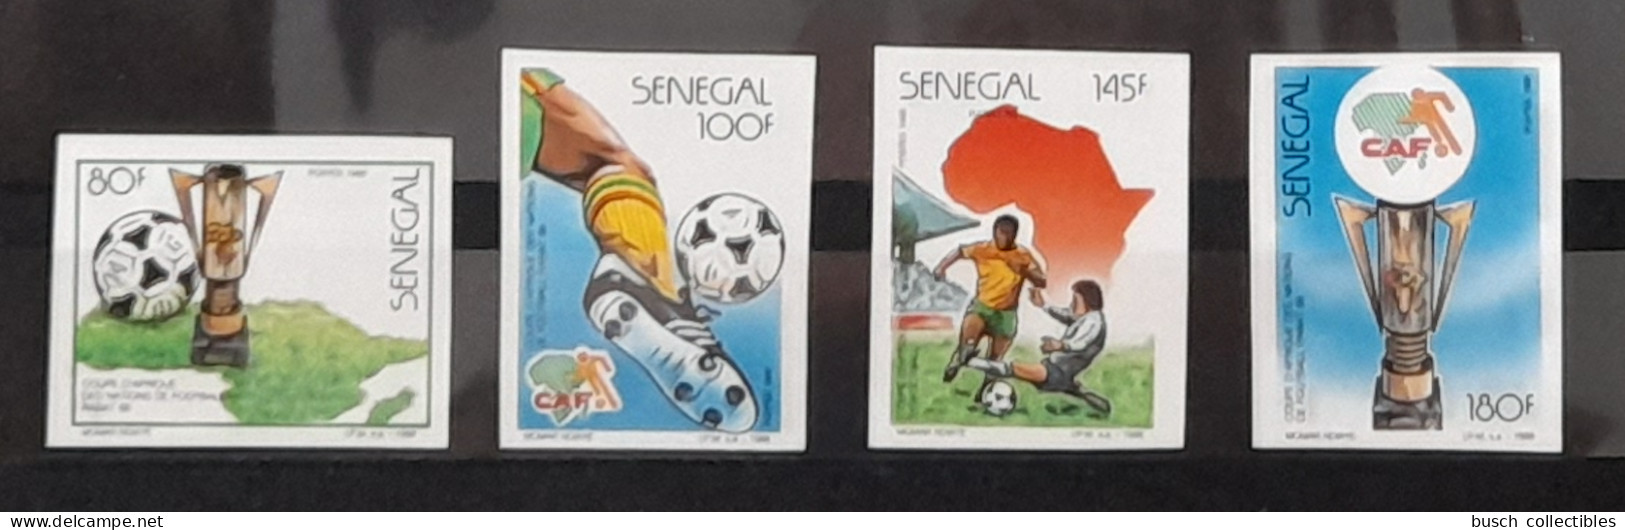 Sénégal 1988 Mi. 973 - 976 IMPERF ND Football Fußball Soccer CAF CAN Coupe D'Afrique Des Nations Rabat Maroc - Fußball-Afrikameisterschaft